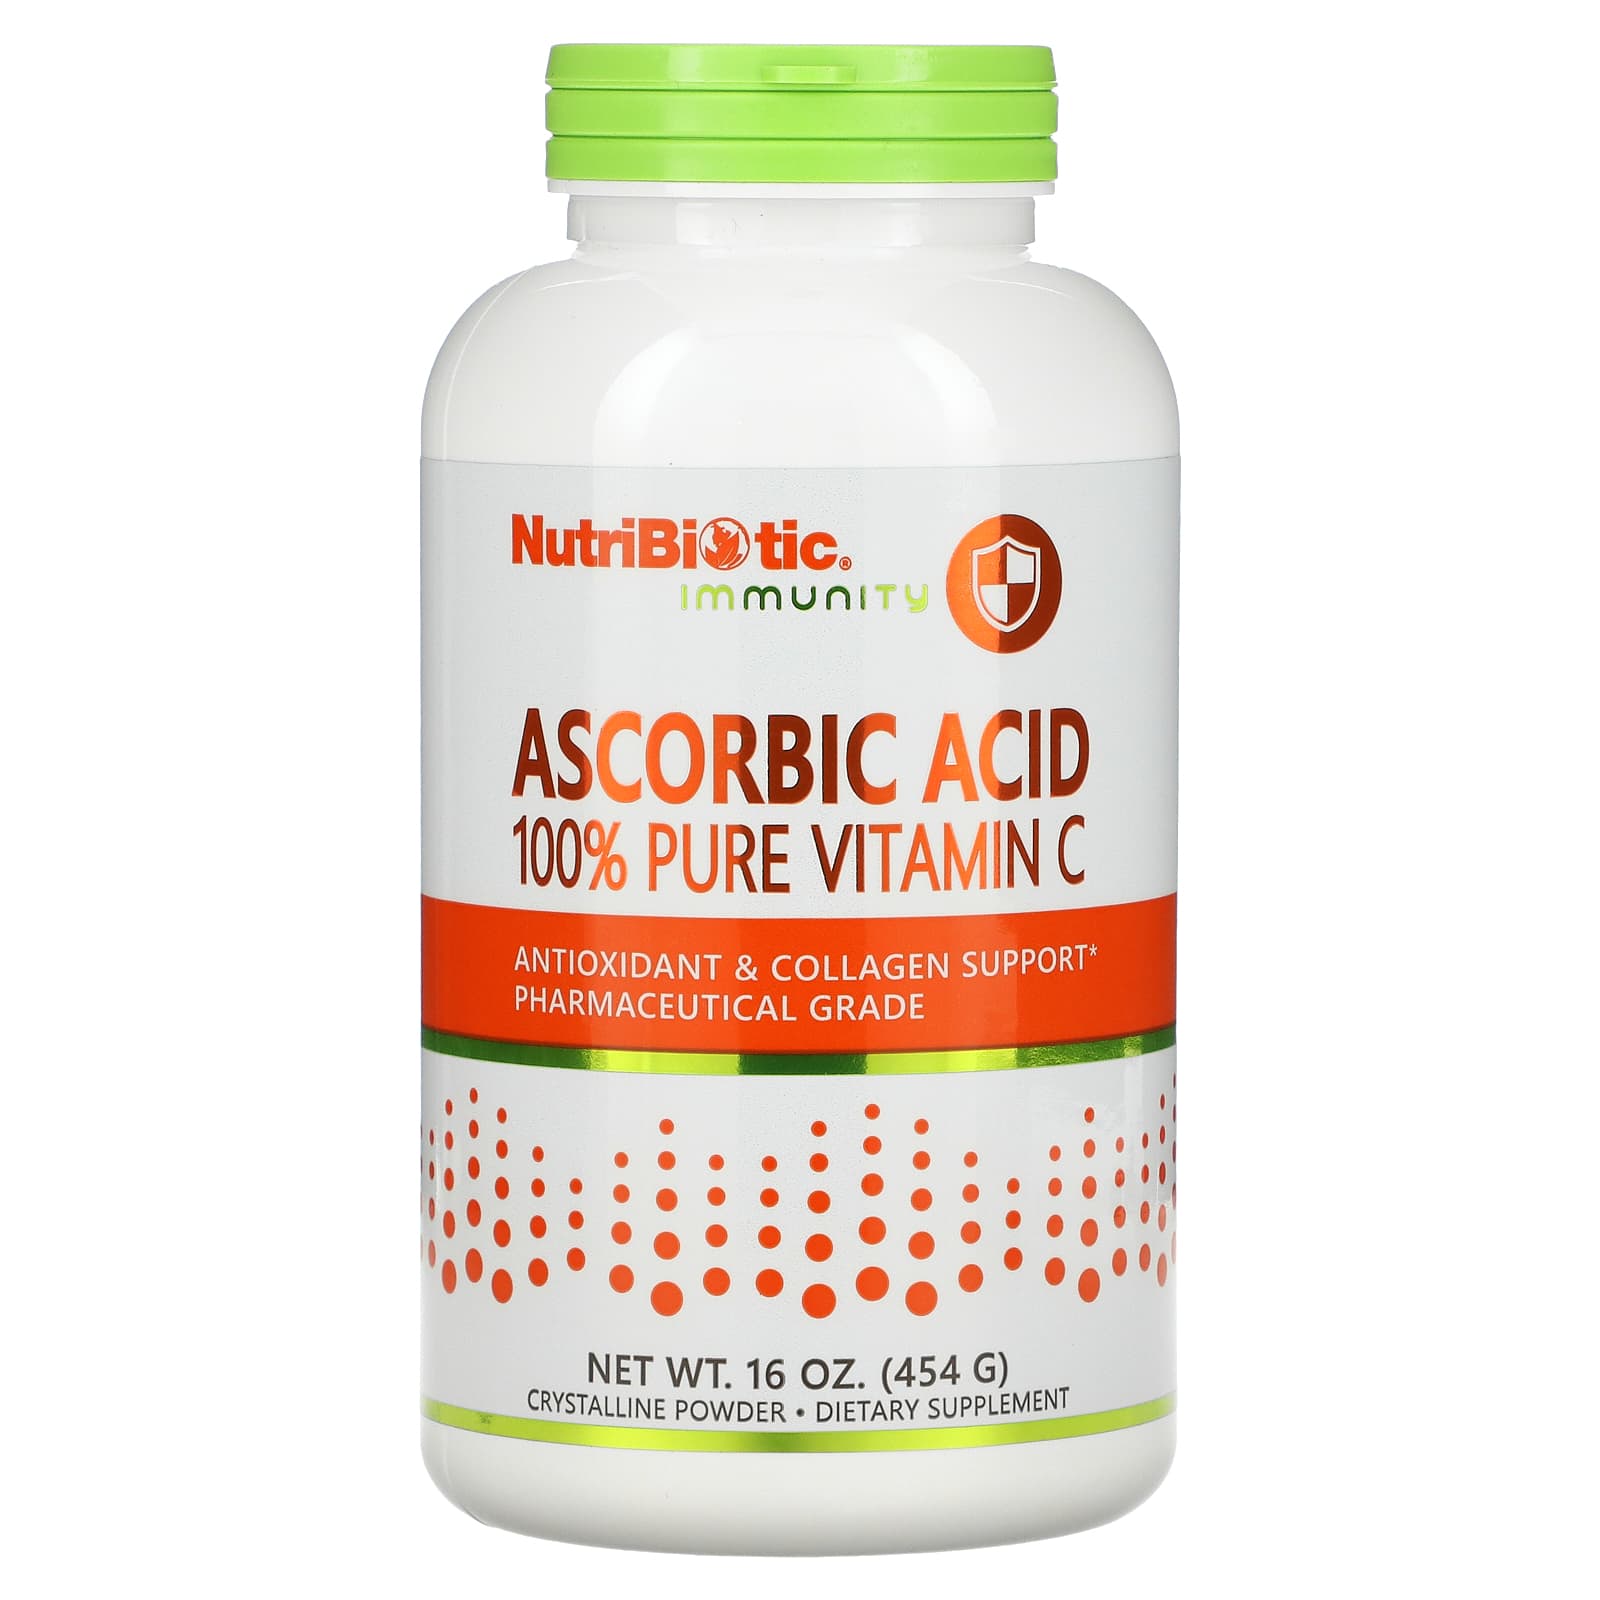 NutriBiotic-Immunity-Ascorbic Acid-100% Pure Vitamin C-Crystalline Powder-16 oz (454 g)